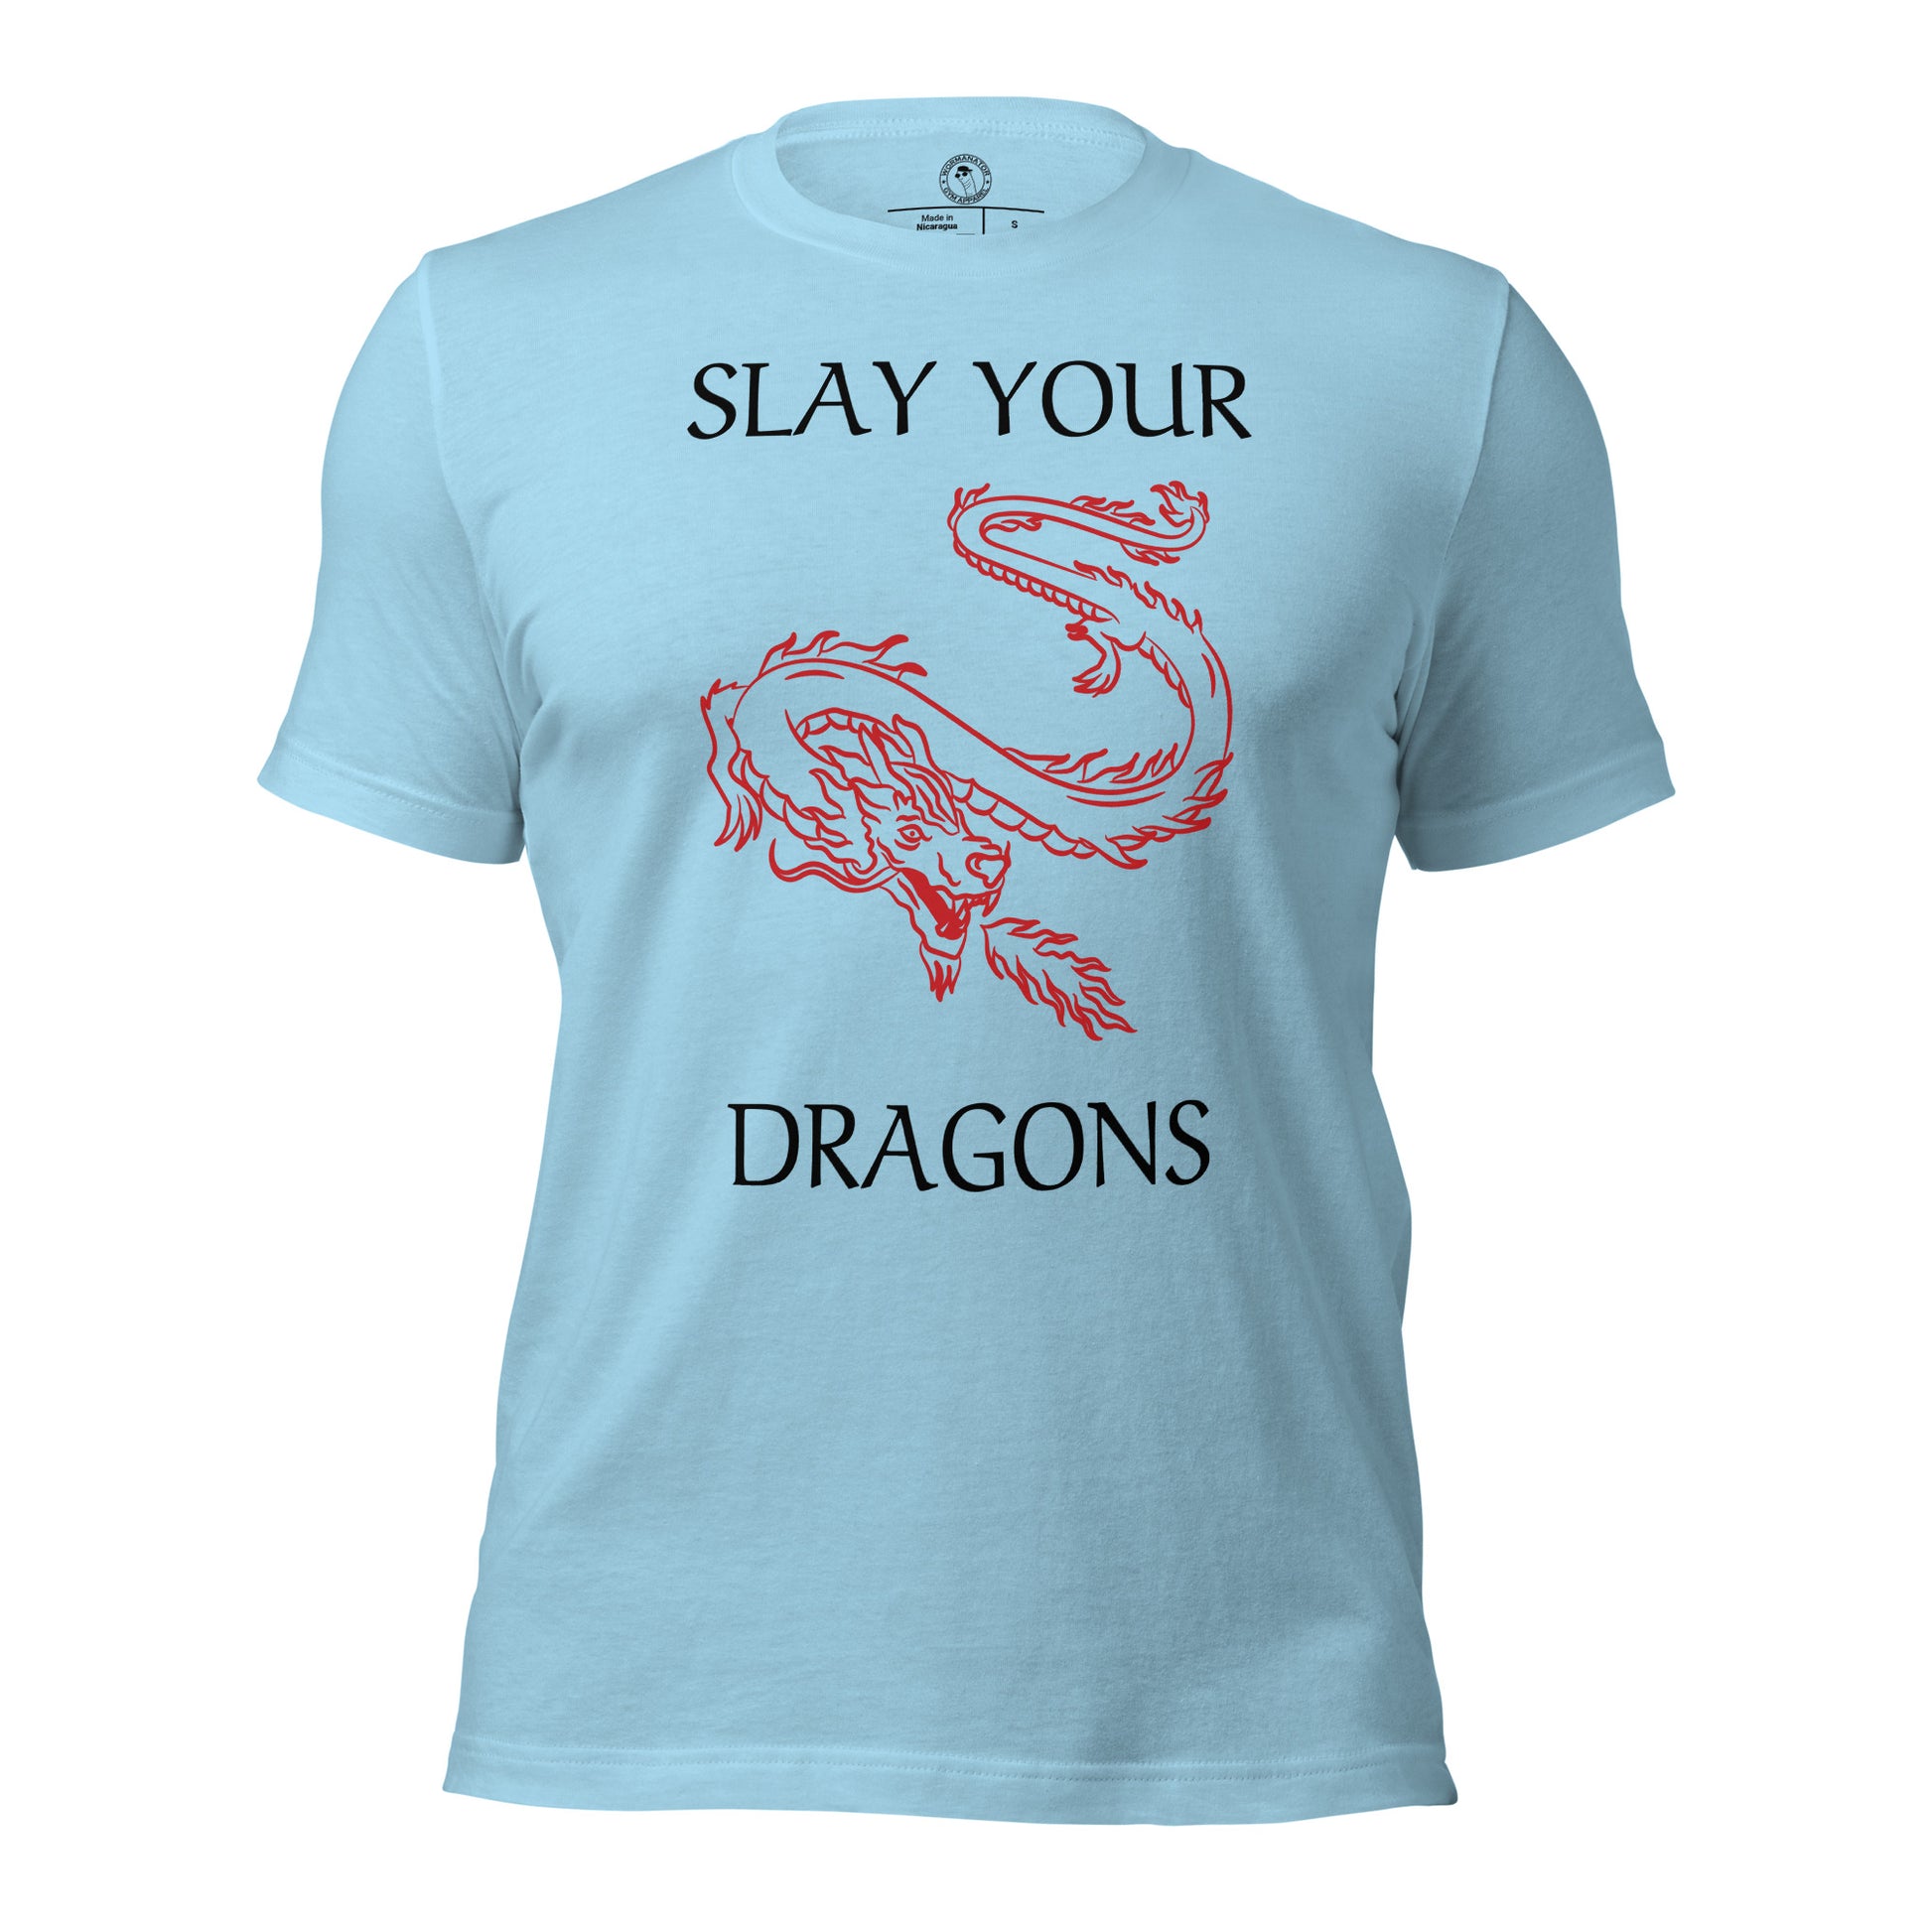 Slay Your Dragons Shirt in Ocean Blue